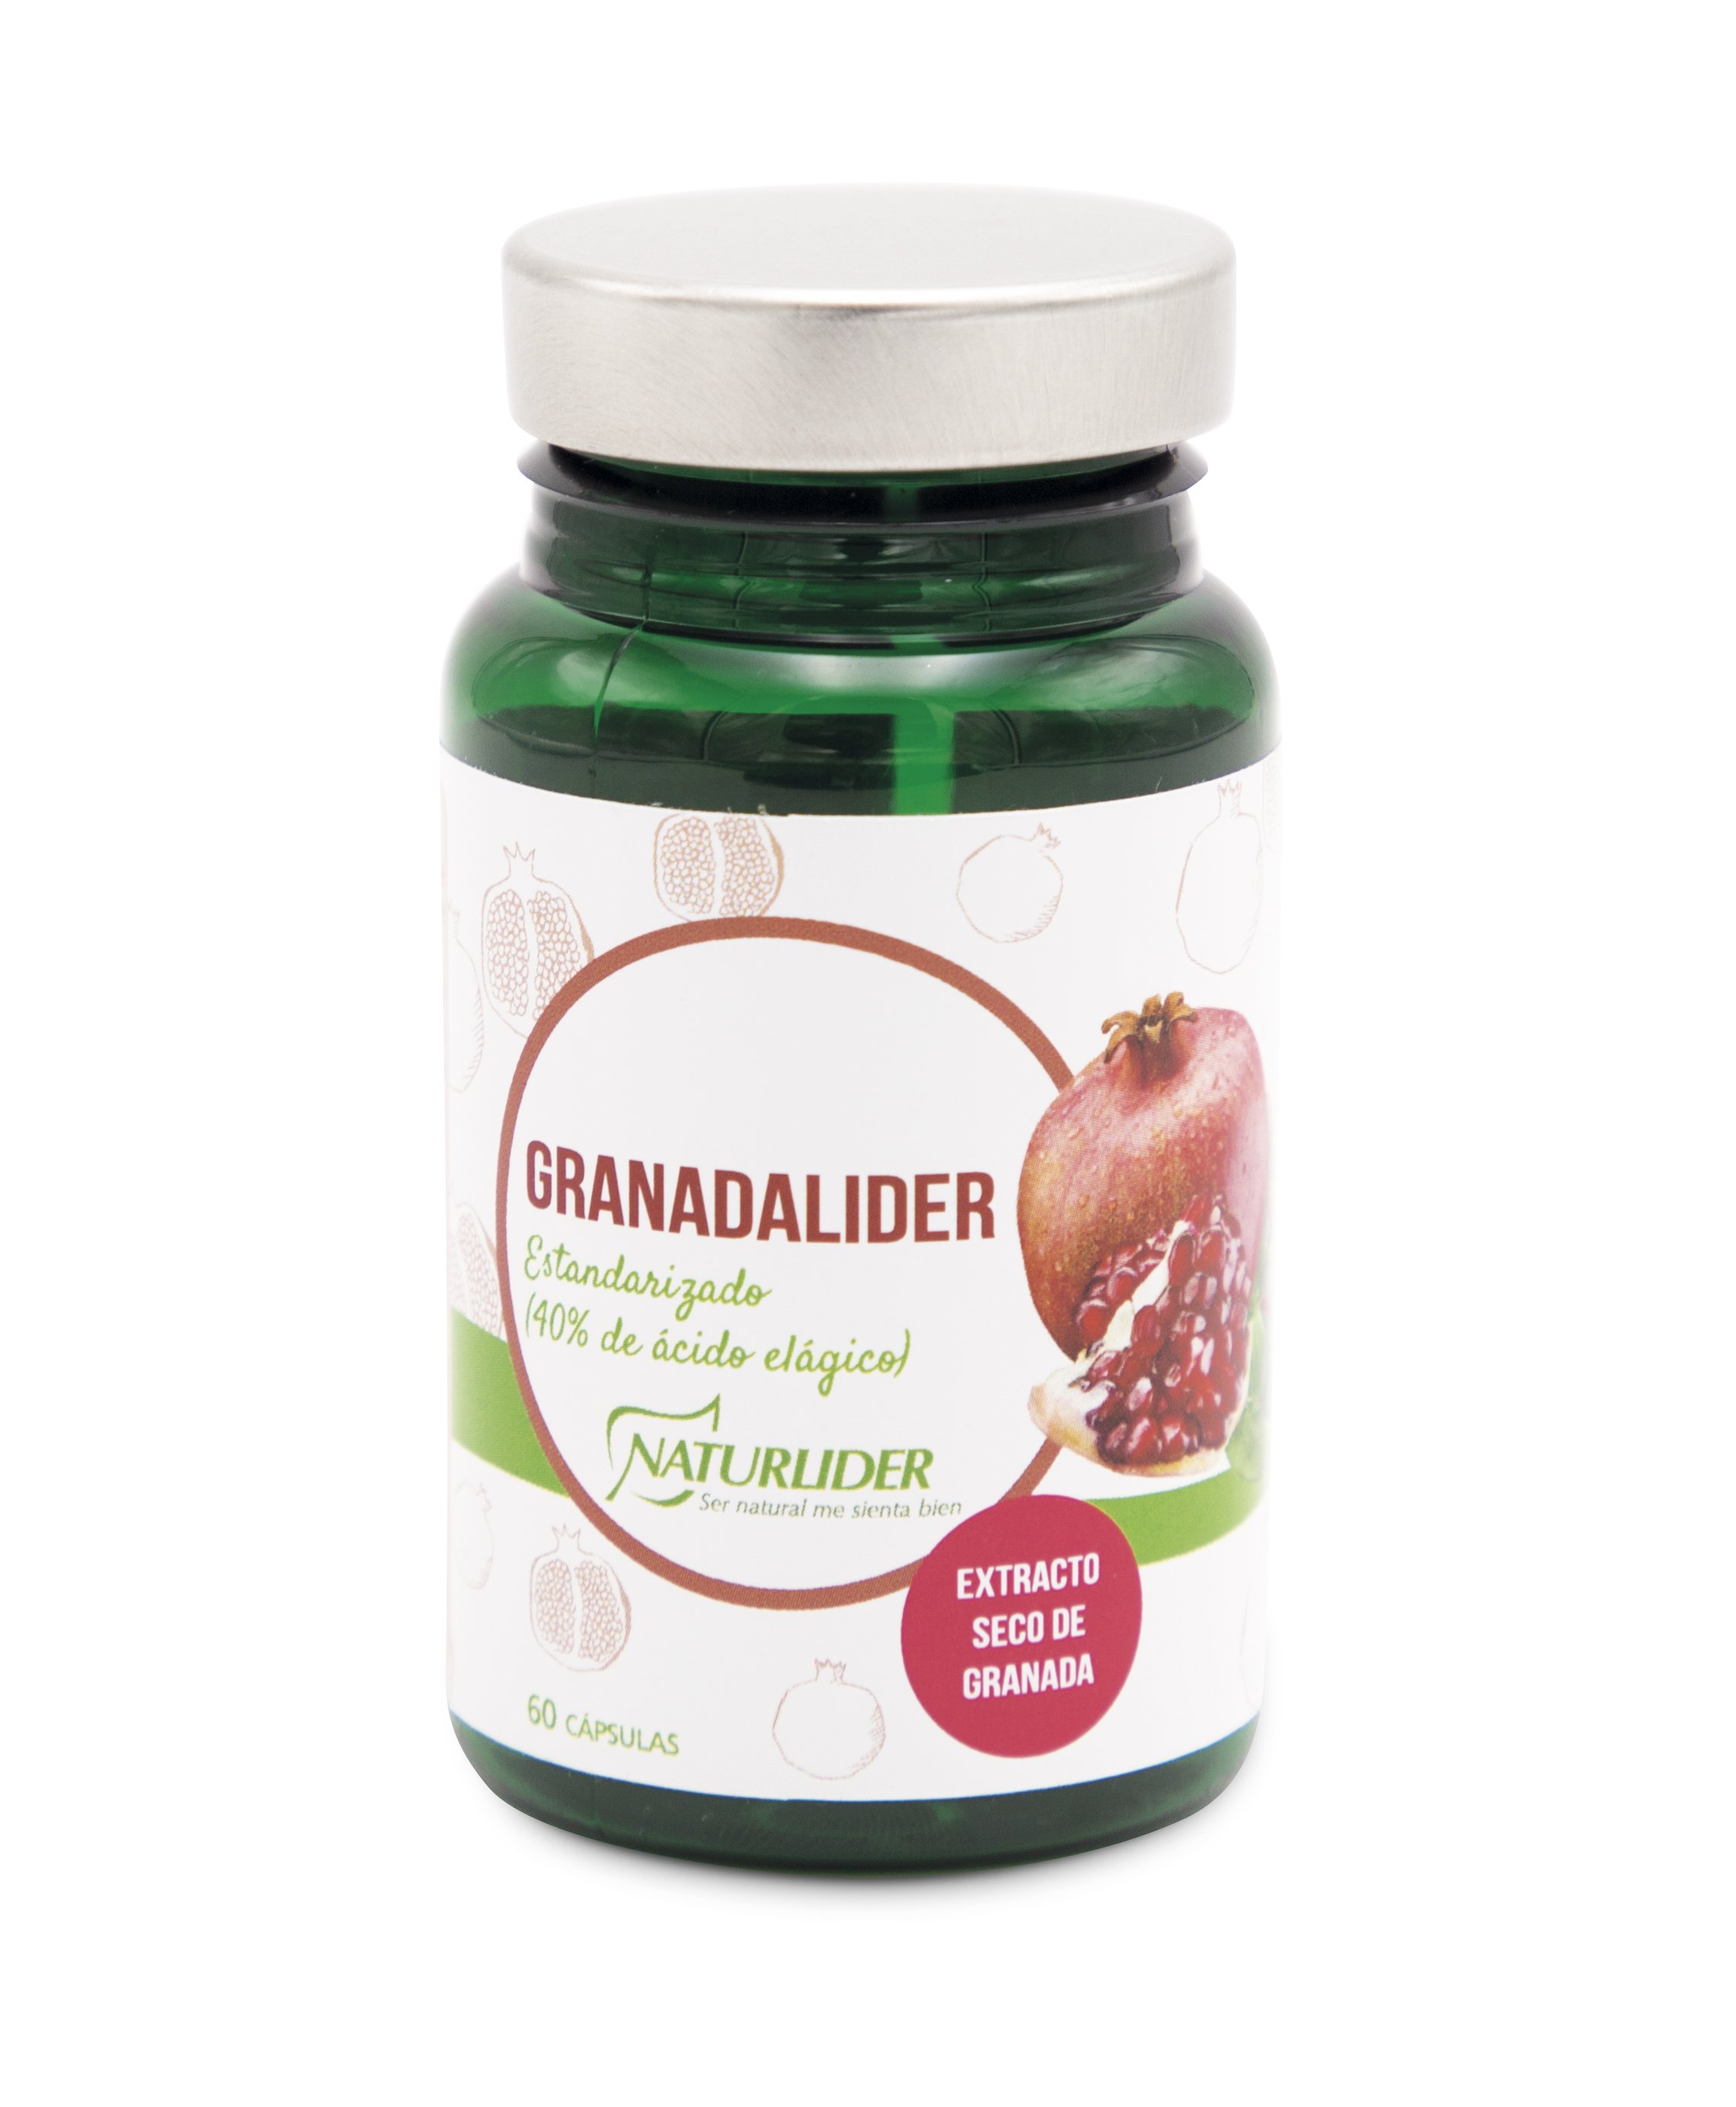 NaturLider Granadalider, 60 Vegicaps. Antioxidante natural. 